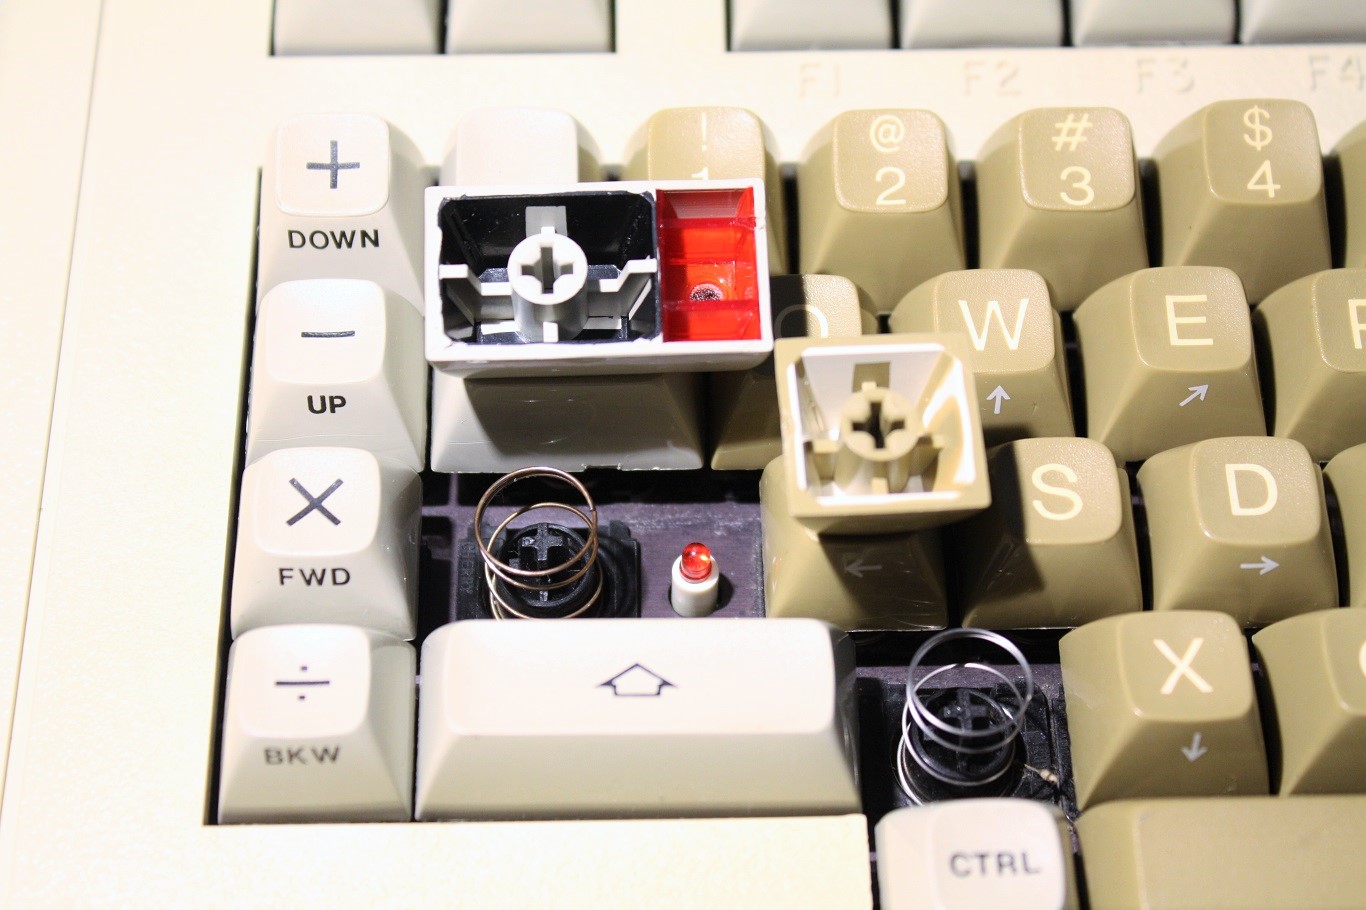 Cherry Terminal Keyboard - key caps